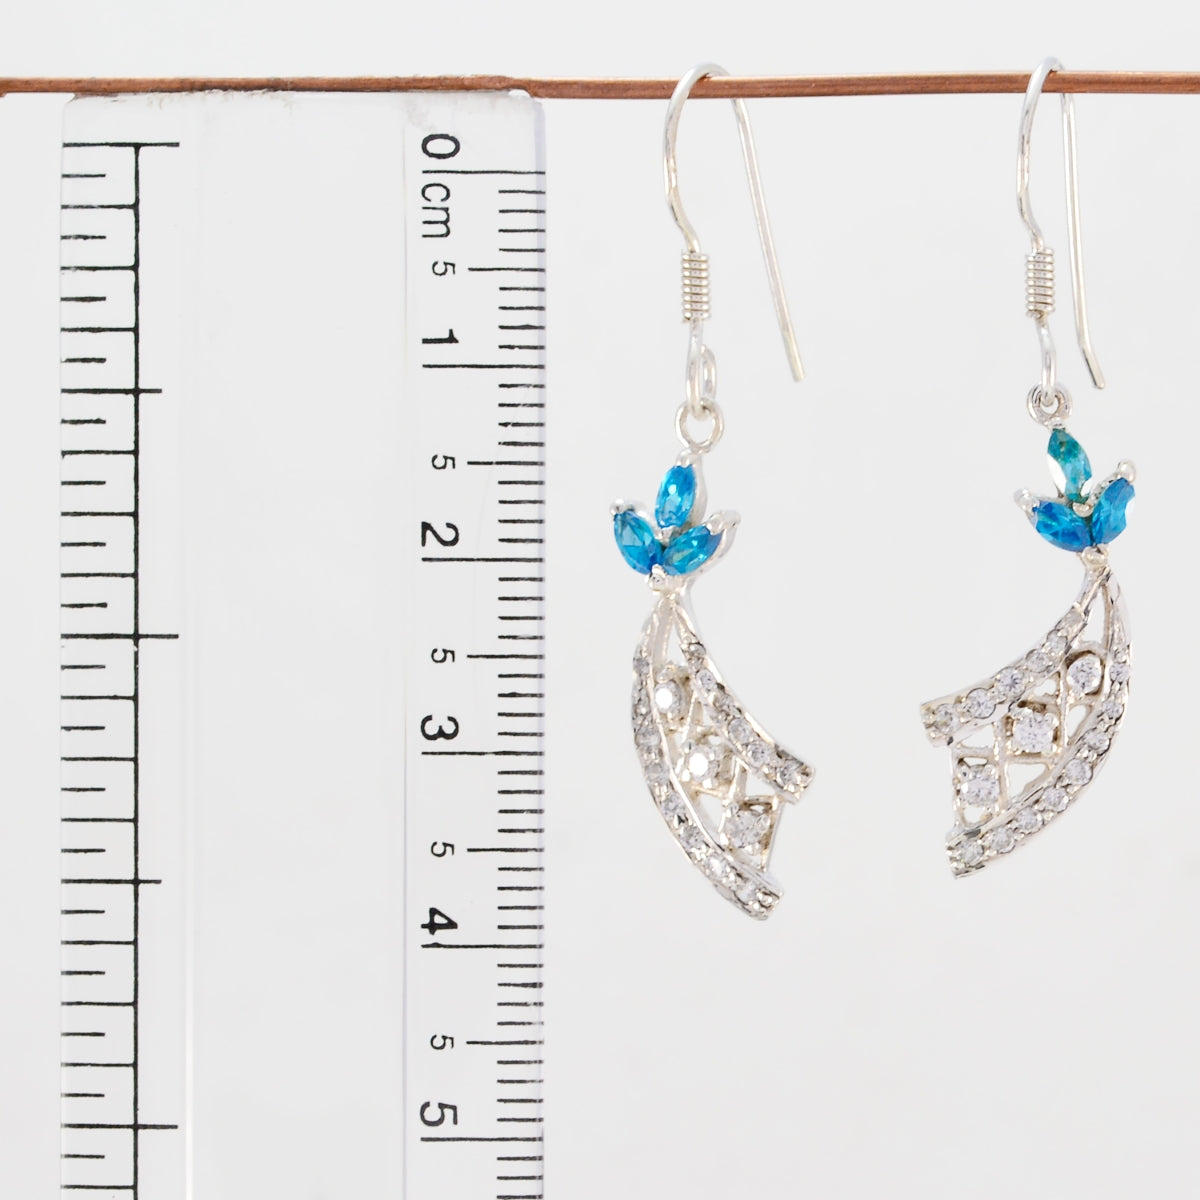 Riyo Good Gemstones multi shape Faceted Multi Multi CZ Silver Earrings gift for Faishonable day